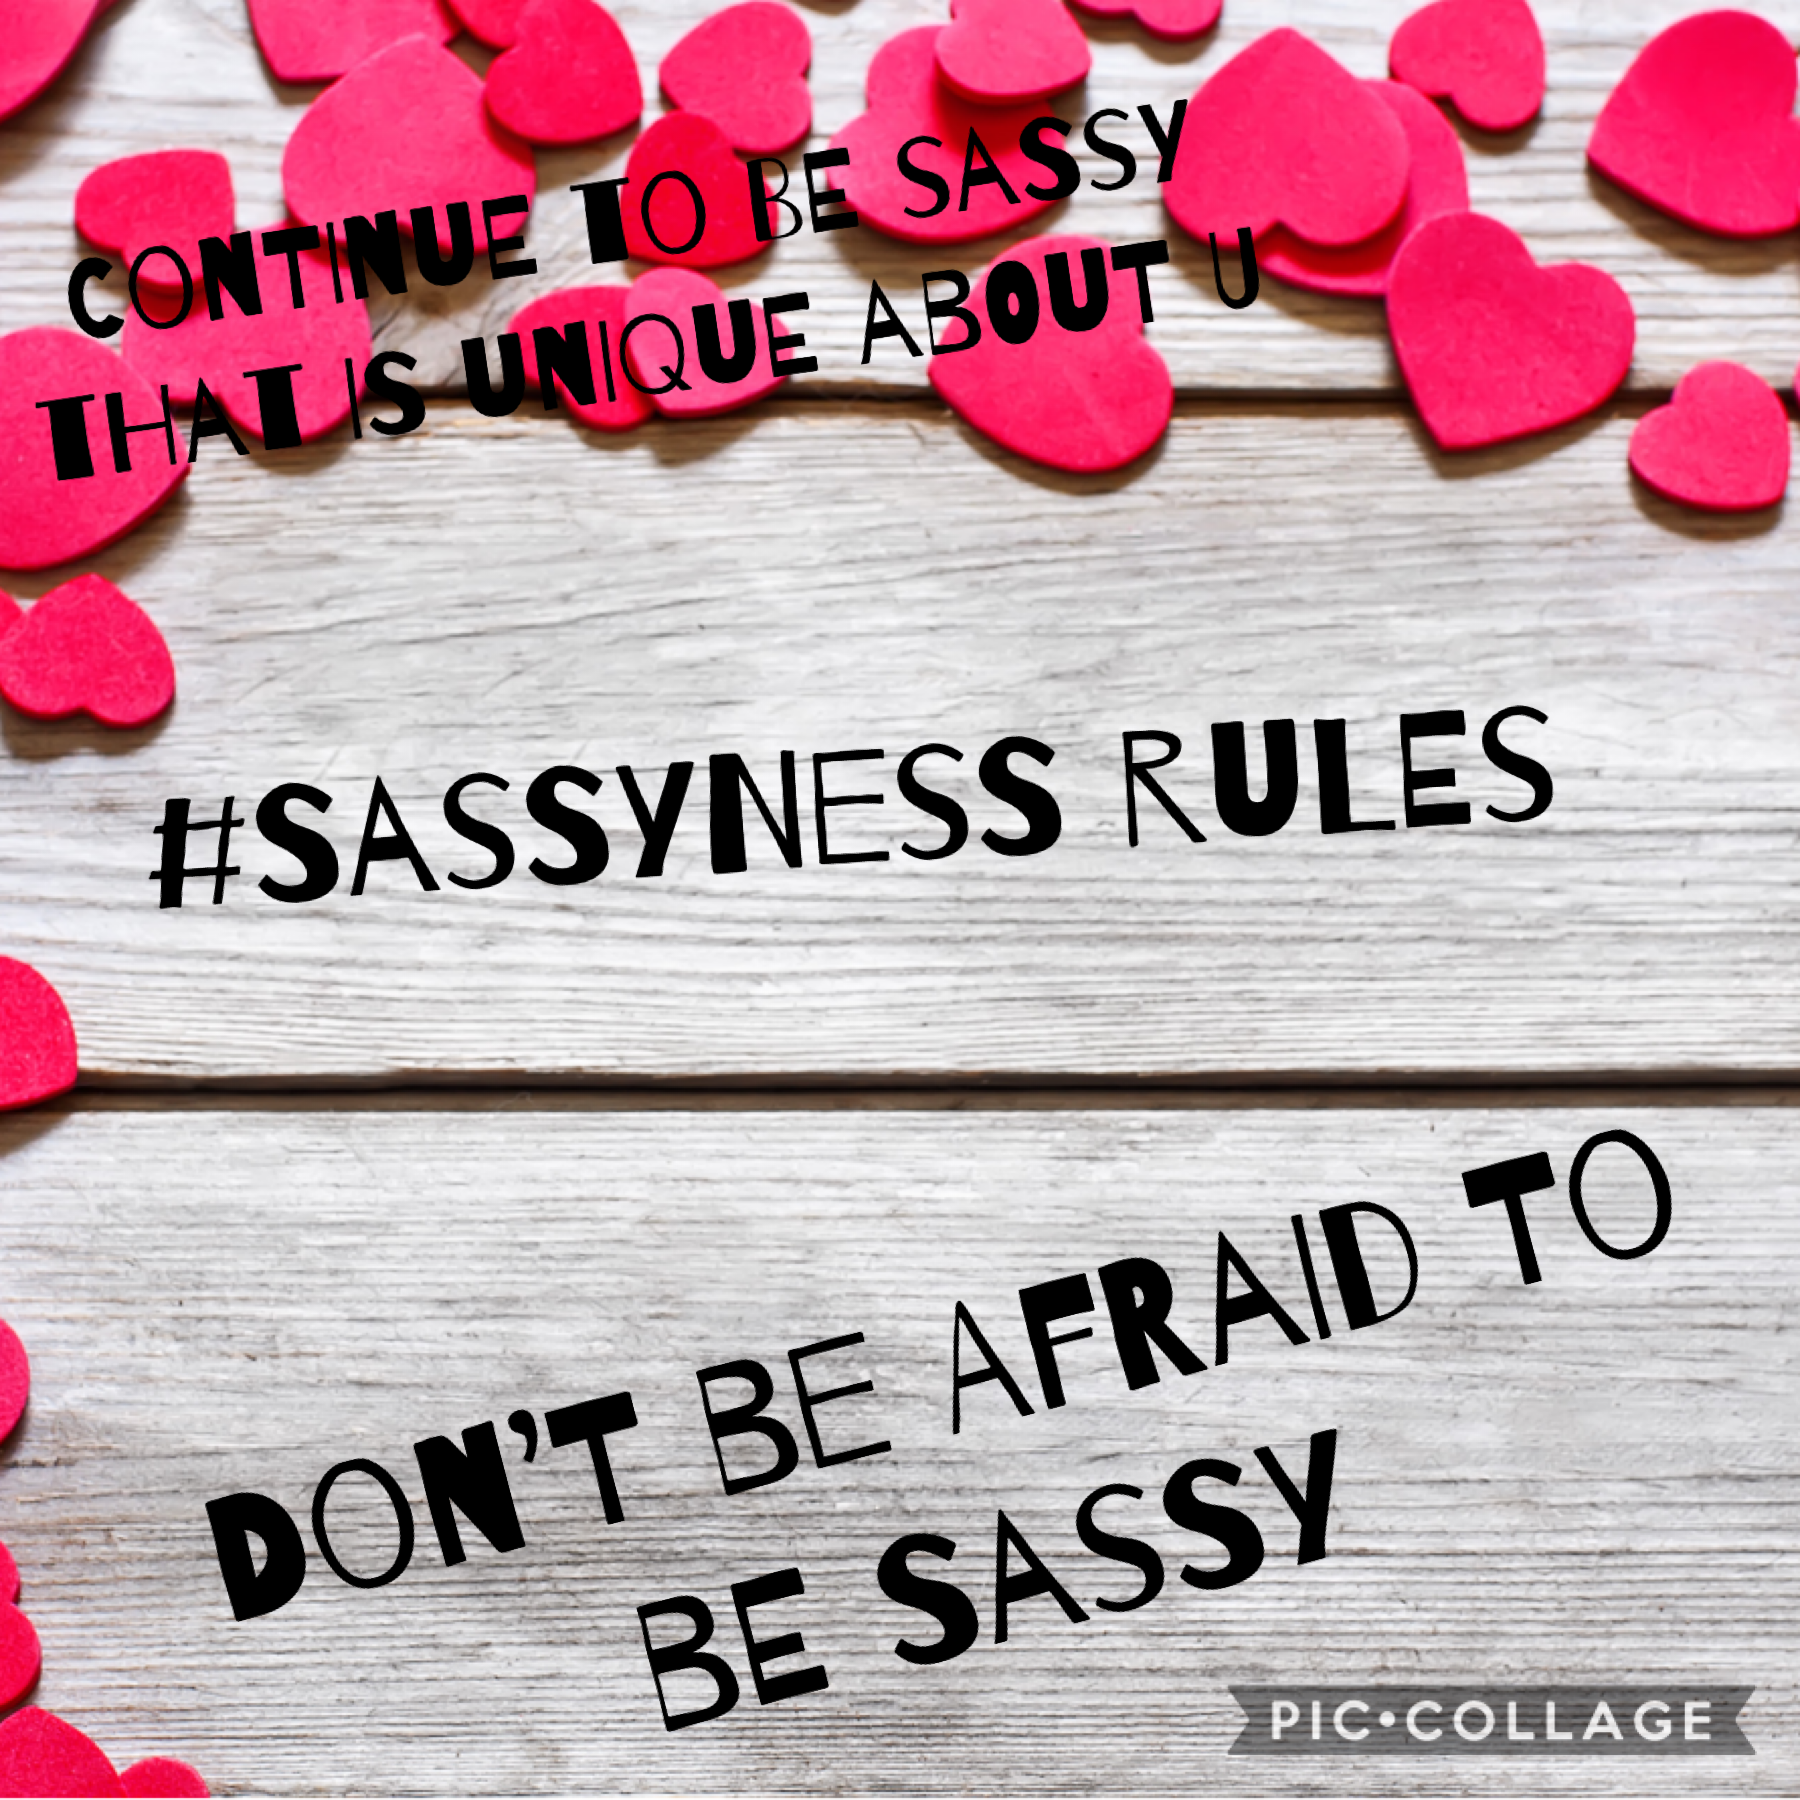 Be sassy